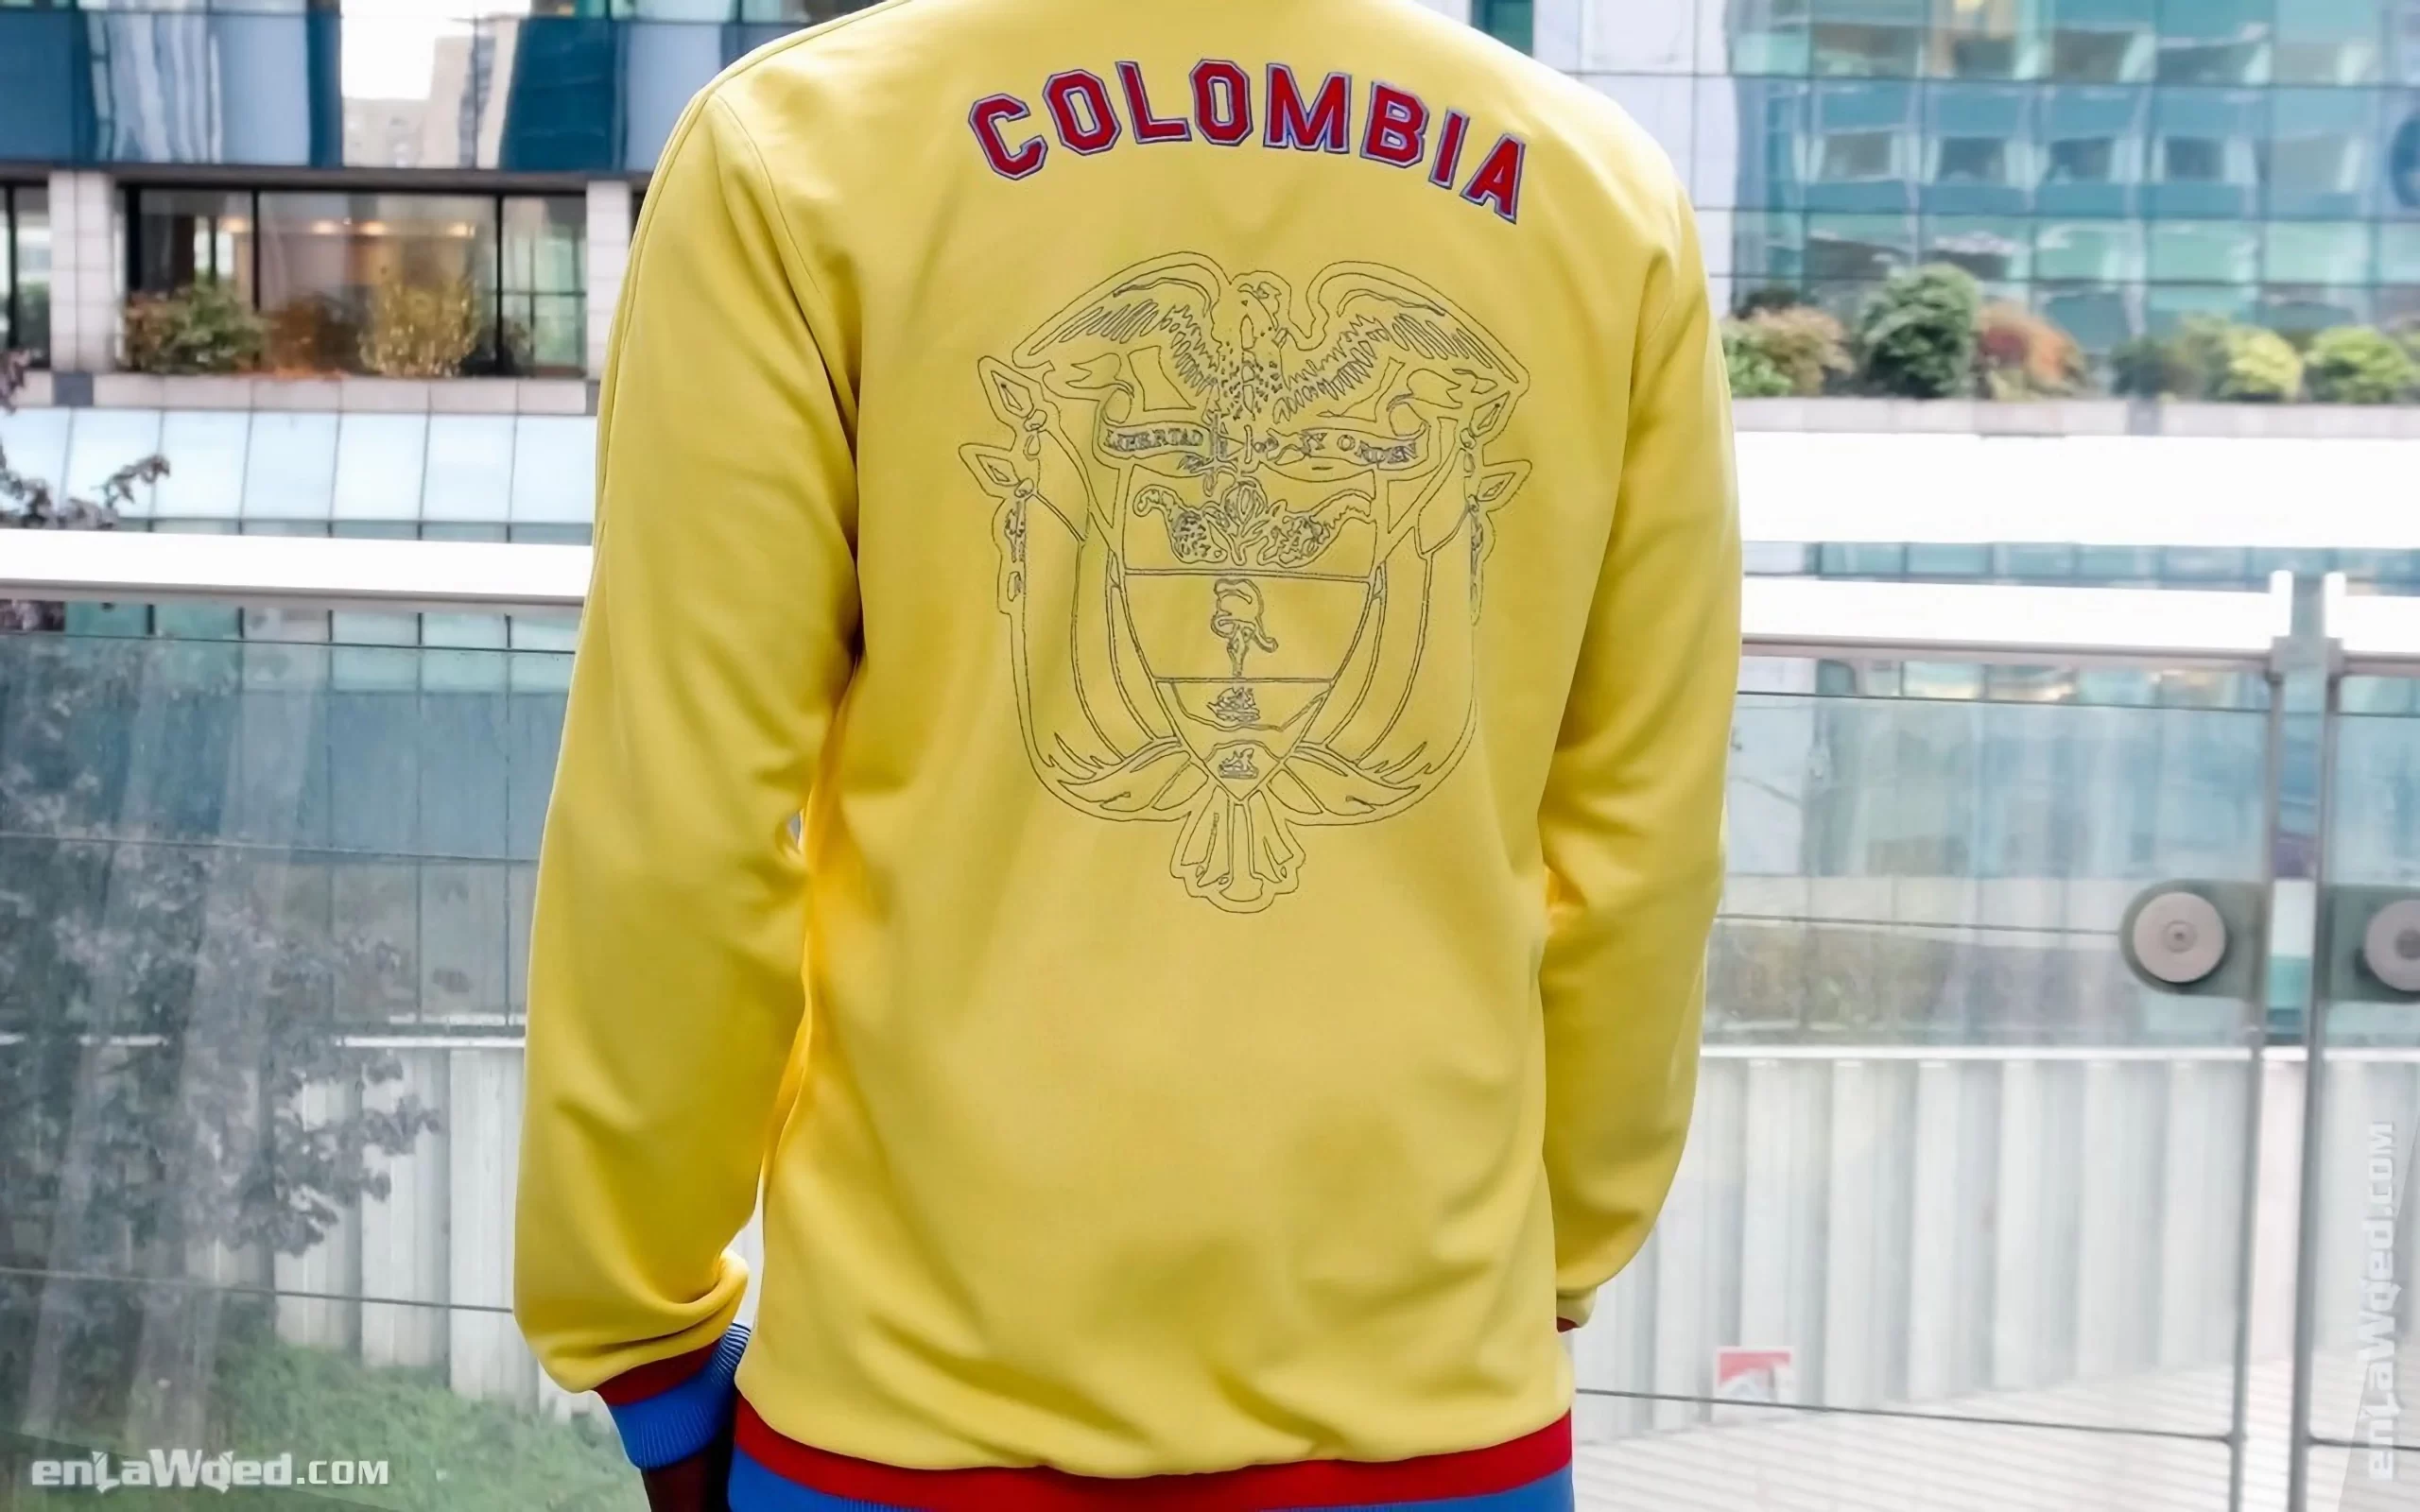 Men’s 2006 Colombia TT by Adidas Originals: Legitimate (EnLawded.com file #lmcf0eclayhc1ea2hfd)